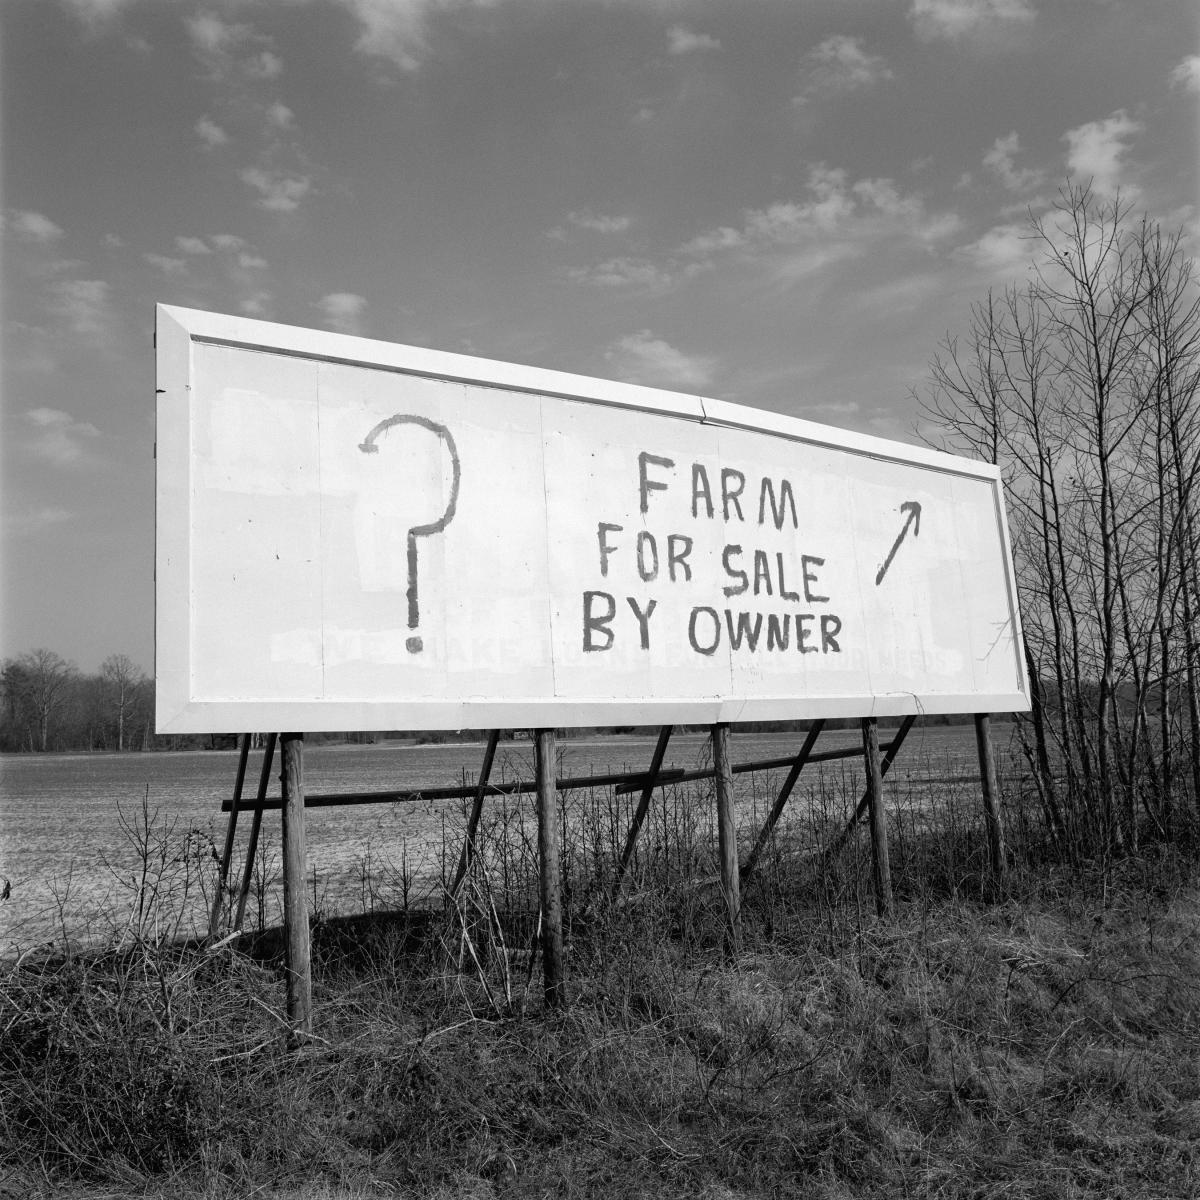 <p><center>Halifax County, North Carolina:</center></p>
" Farm for Sale" billboard. : Images : AMERICAN BLACK FARMERS PROJECT - John Ficara